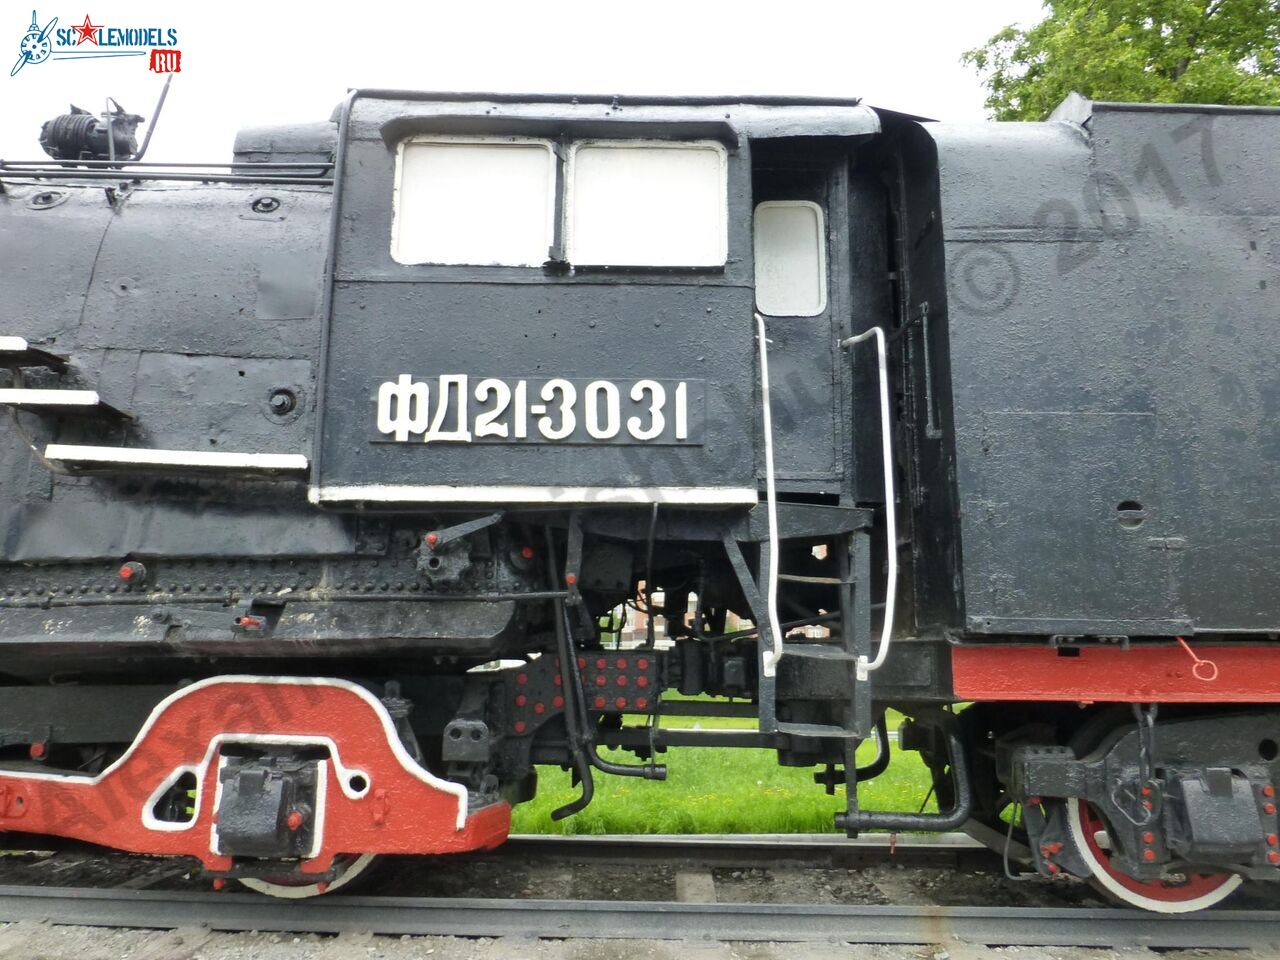 FD21-3031_locomotive_7.jpg